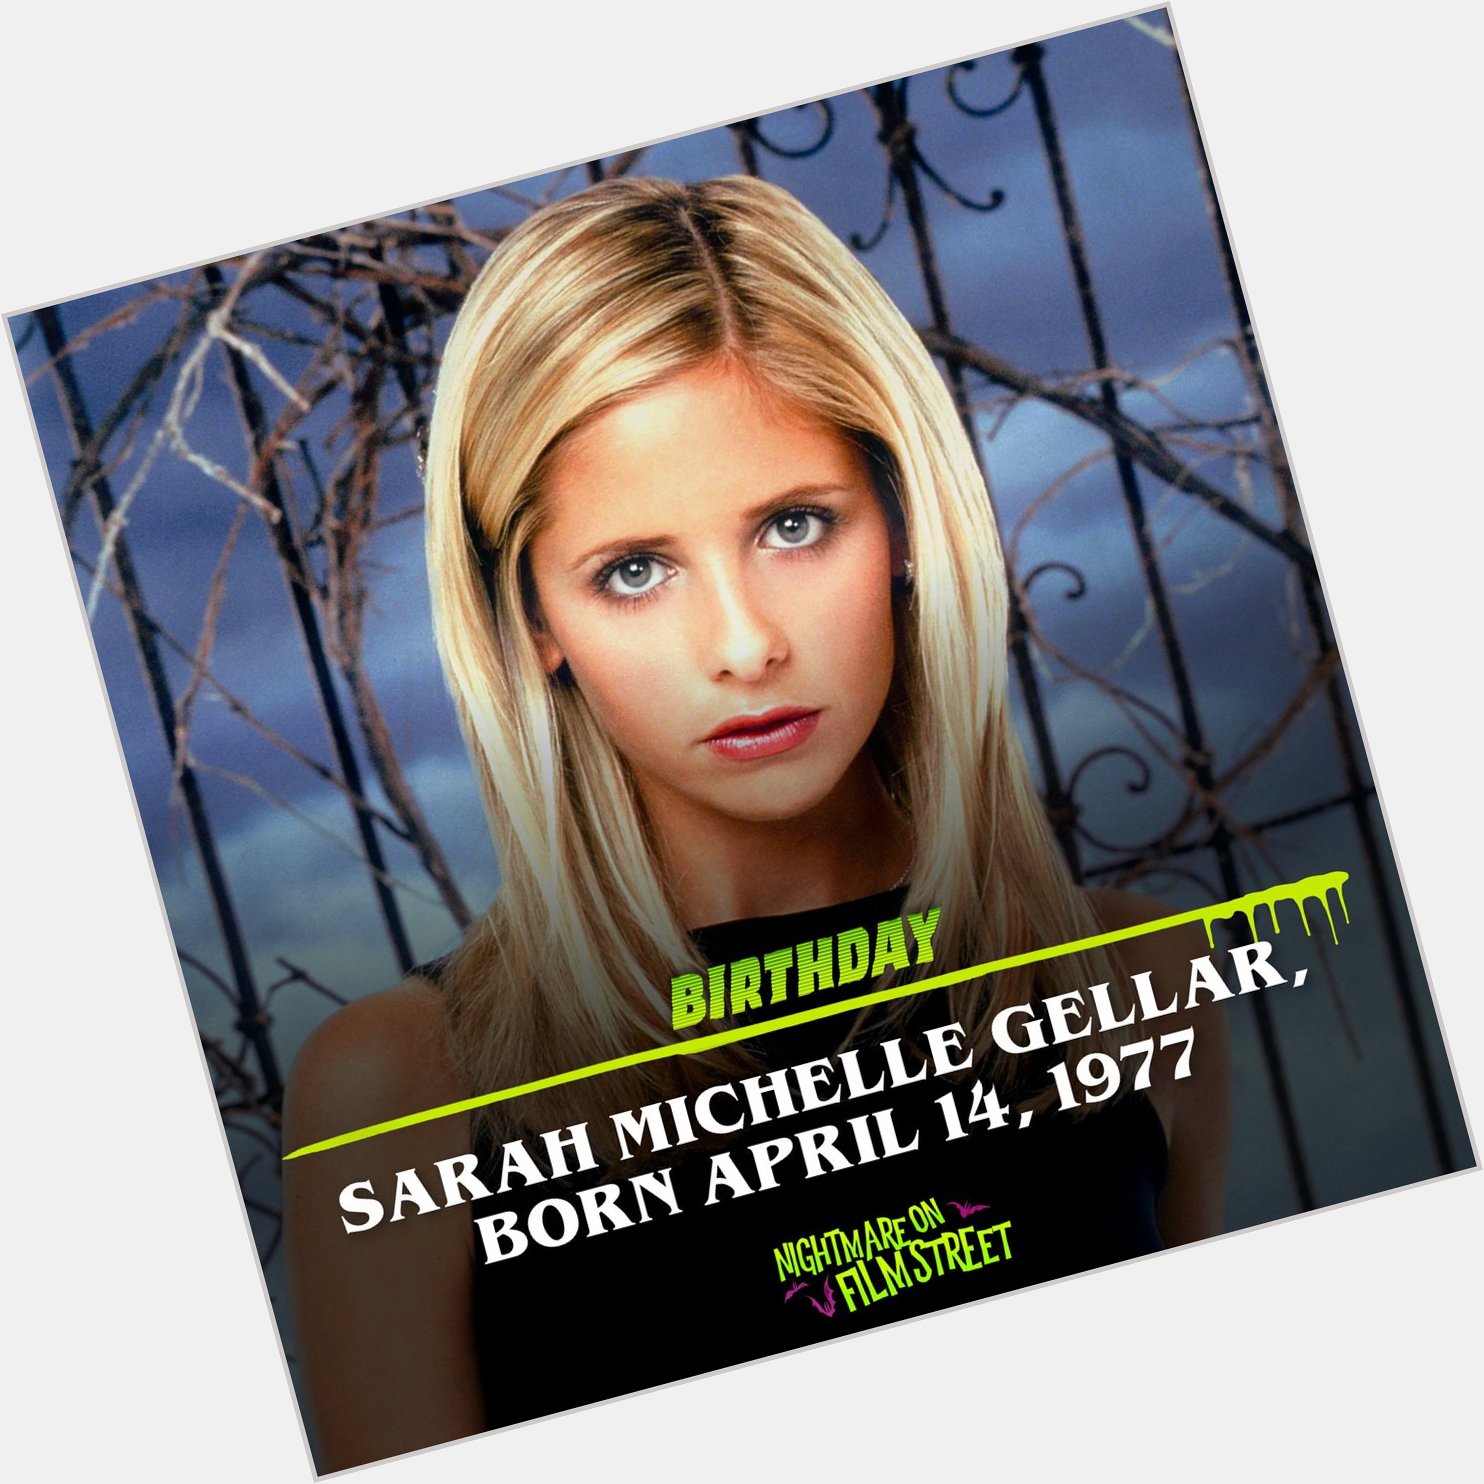 Happy Birthday Buffy! SARAH MICHELLE GELLAR was born in 1977!  